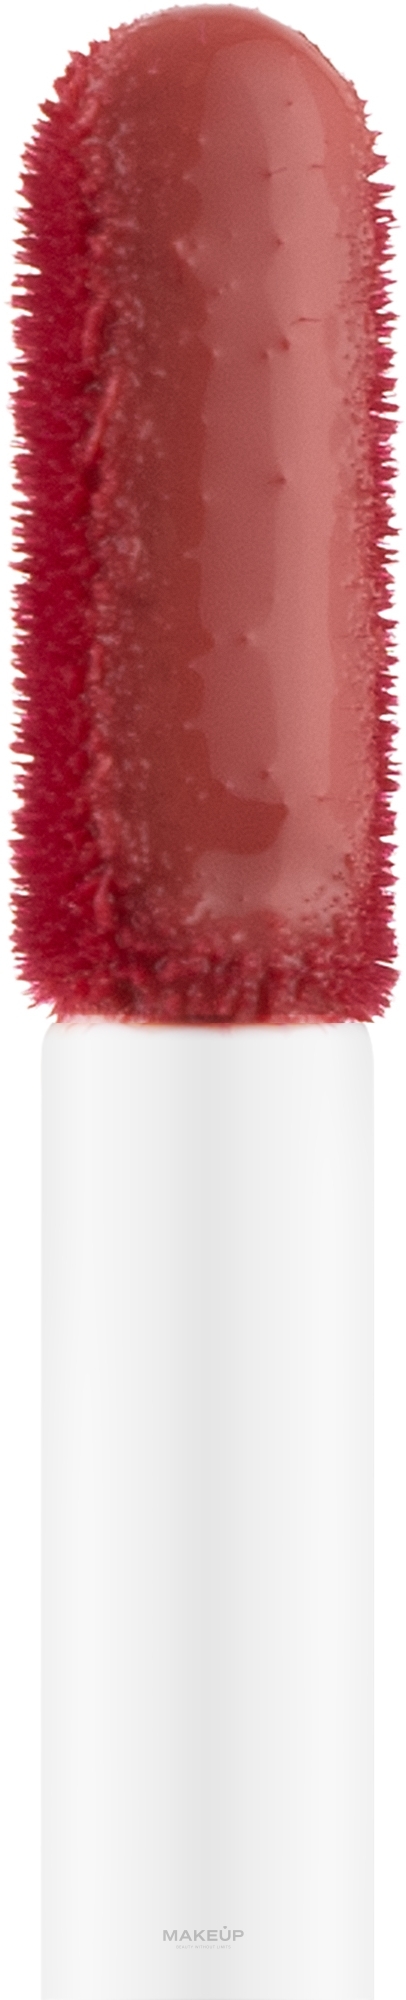 Тинт для губ - Dior Addict Lip Tint — фото 251 - Natural Peach